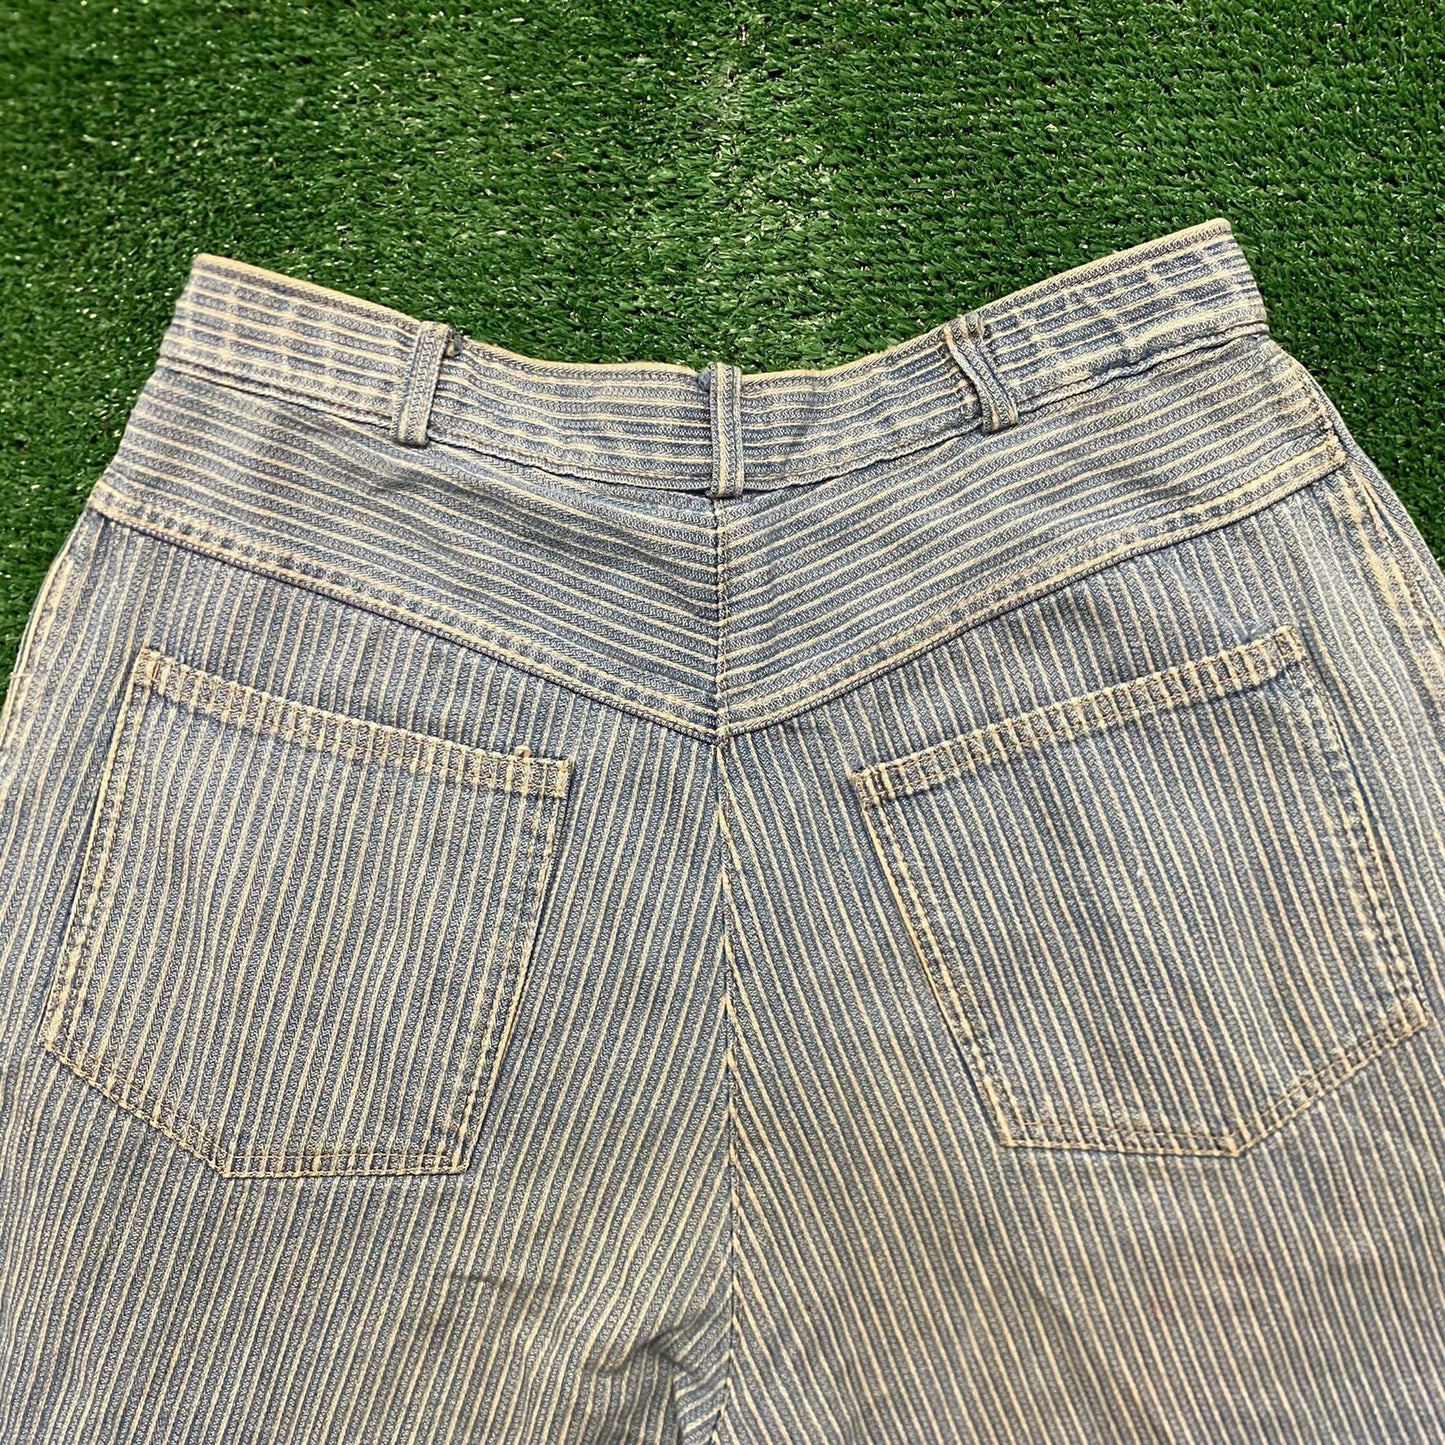 Vintage 90s Pinstriped High Waisted Denim Jean Shorts Jorts